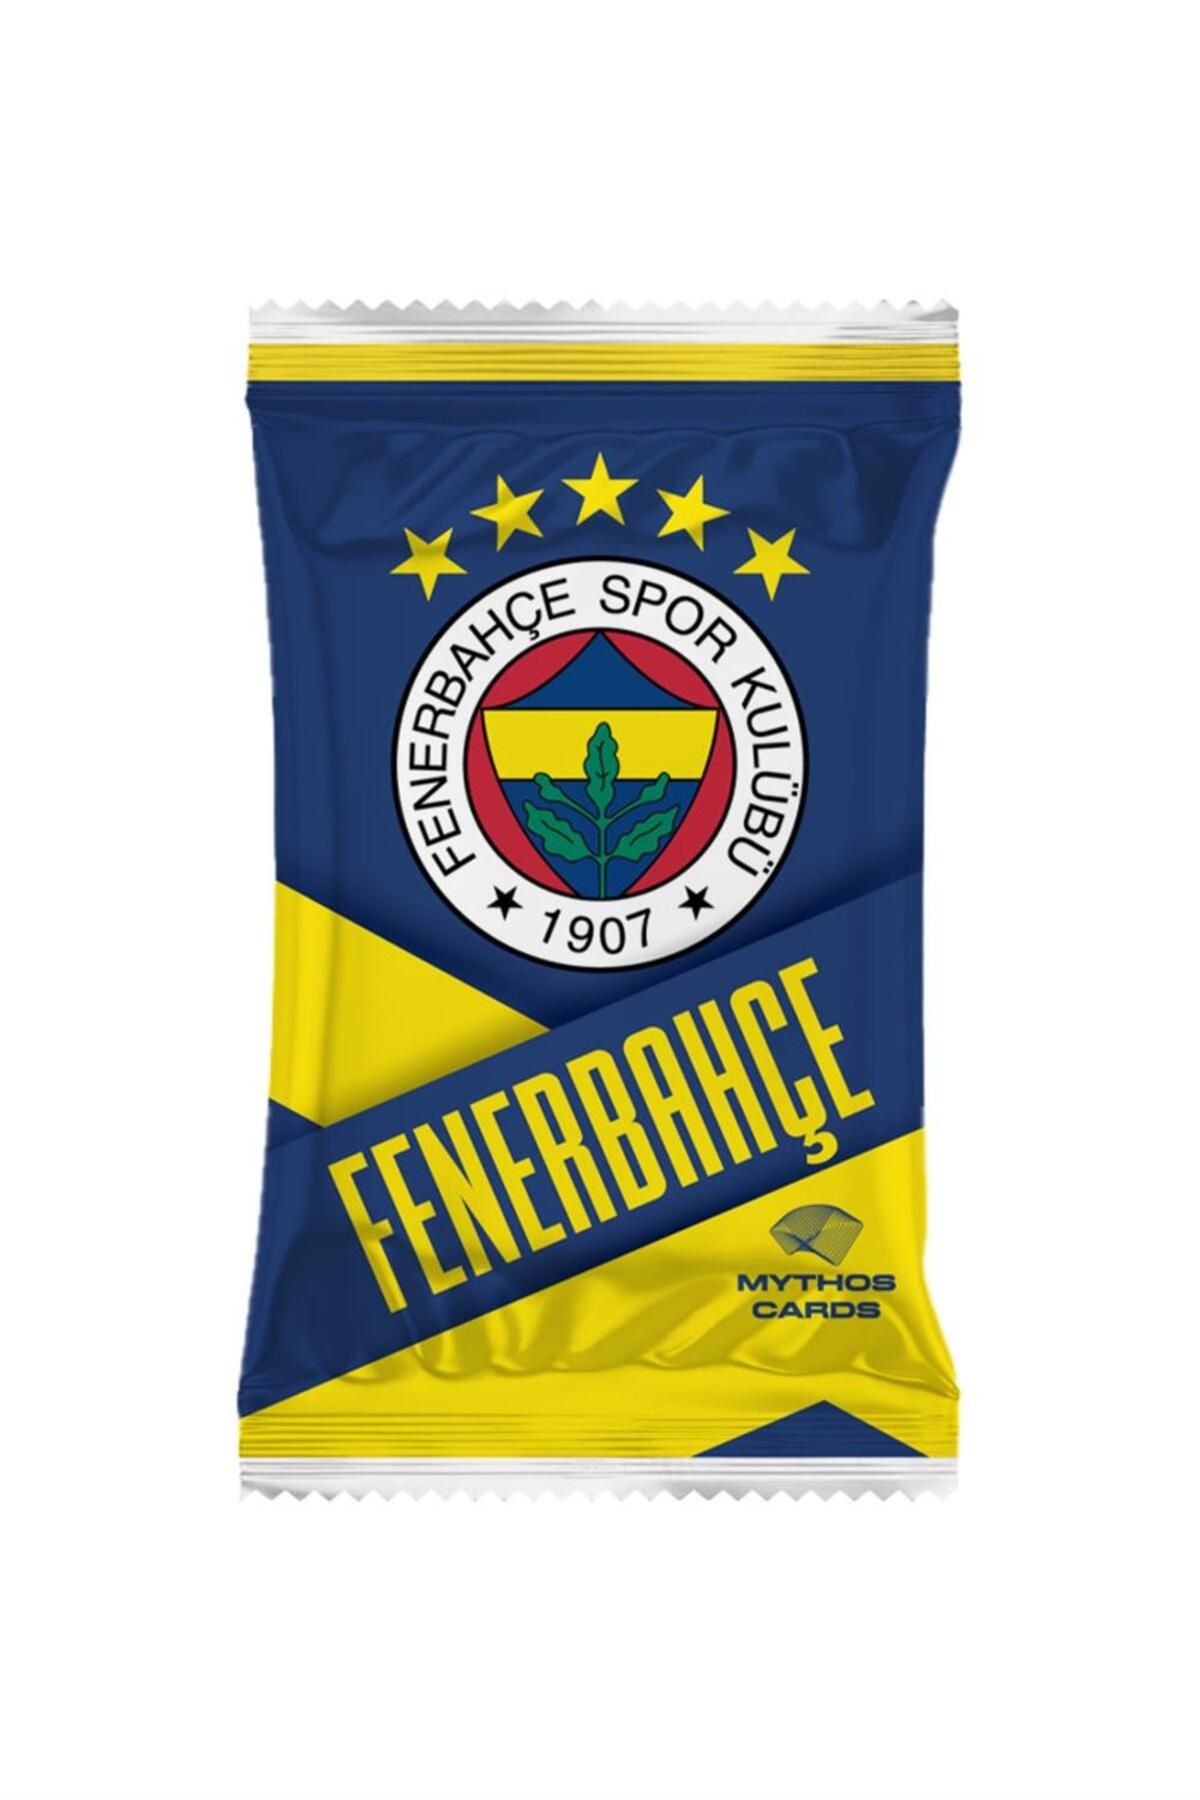 Fenerbahçe Moments Booster Pack Futbolcu Kartları - 5 Kartlık Paket